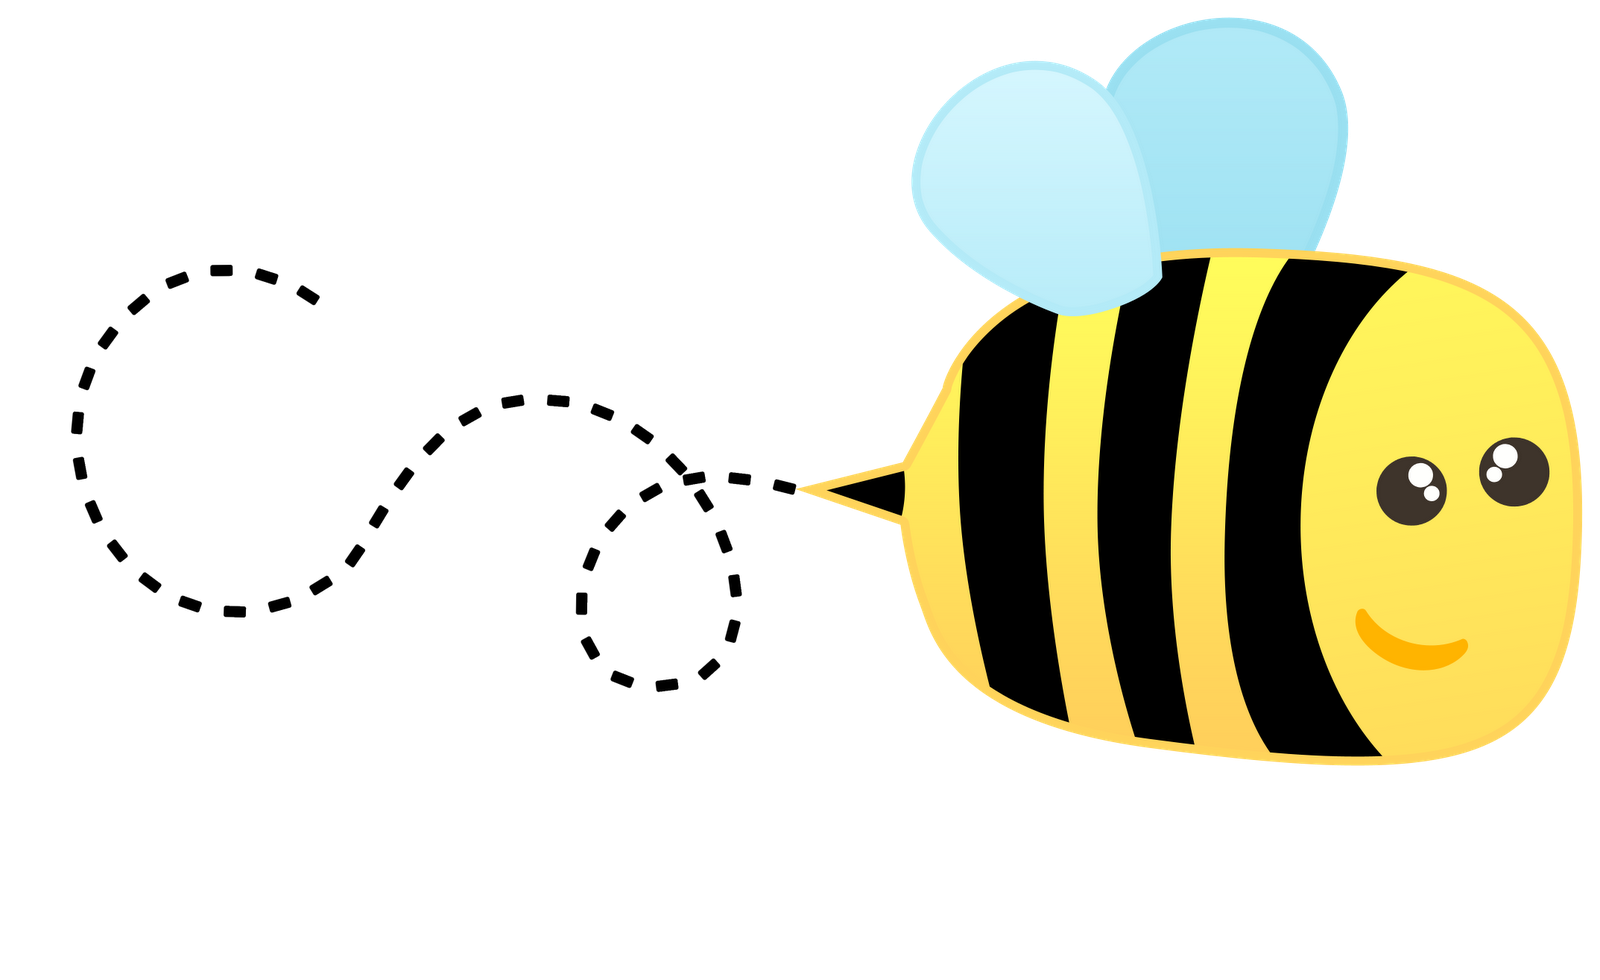 bumble bee clip art images - photo #30